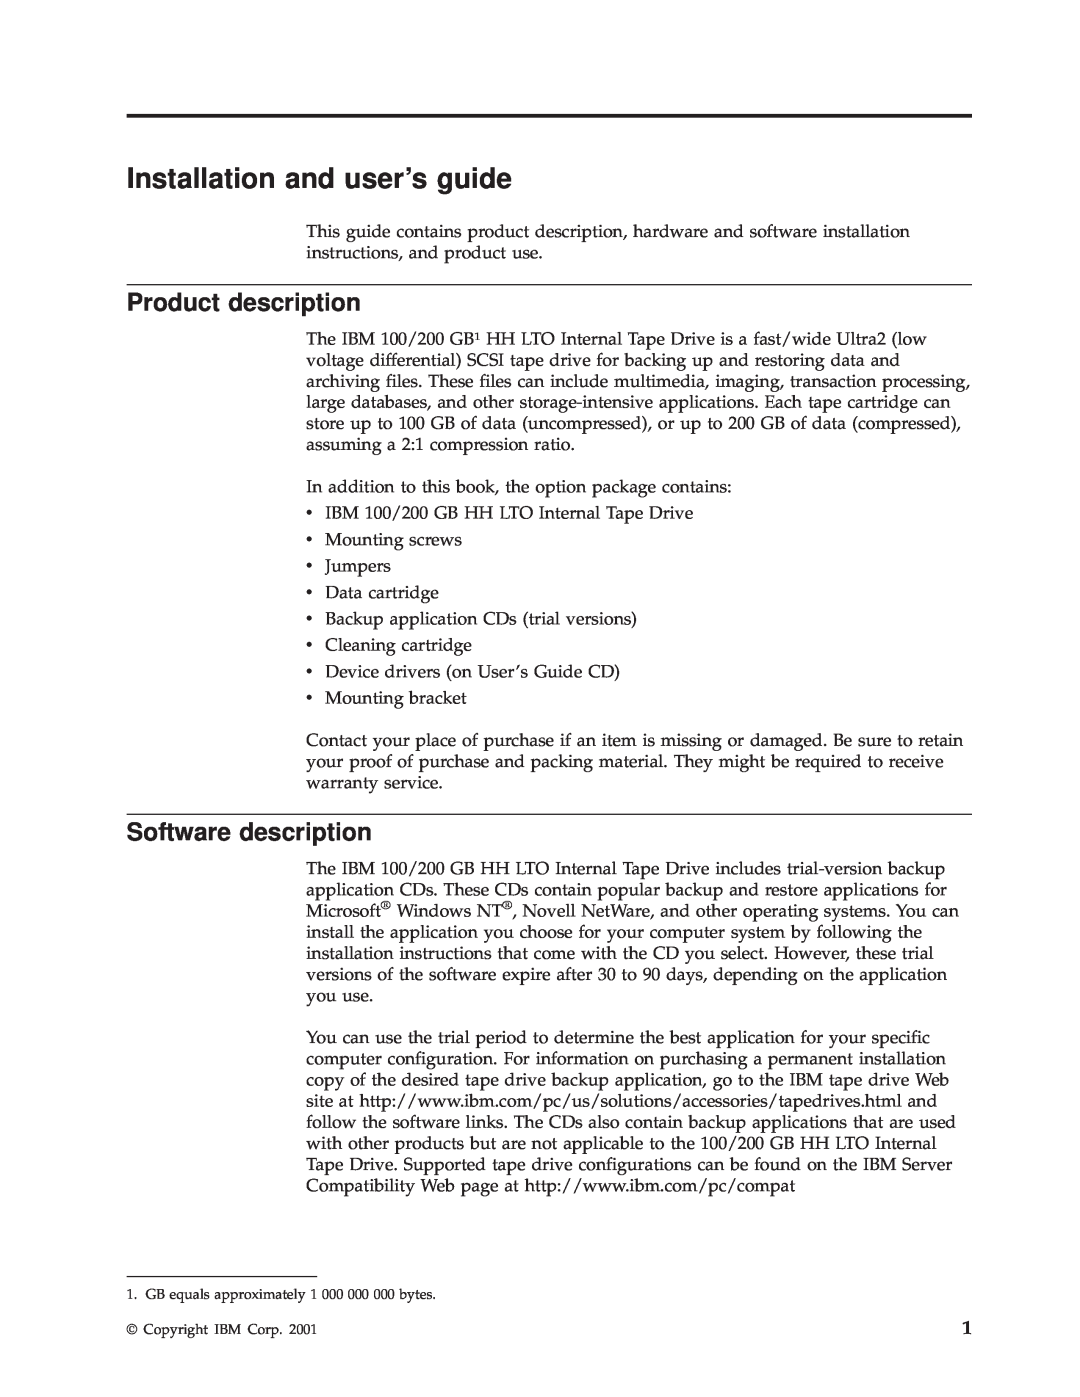 IBM HH LTO manual Installation and user’s guide, Product description, Software description 